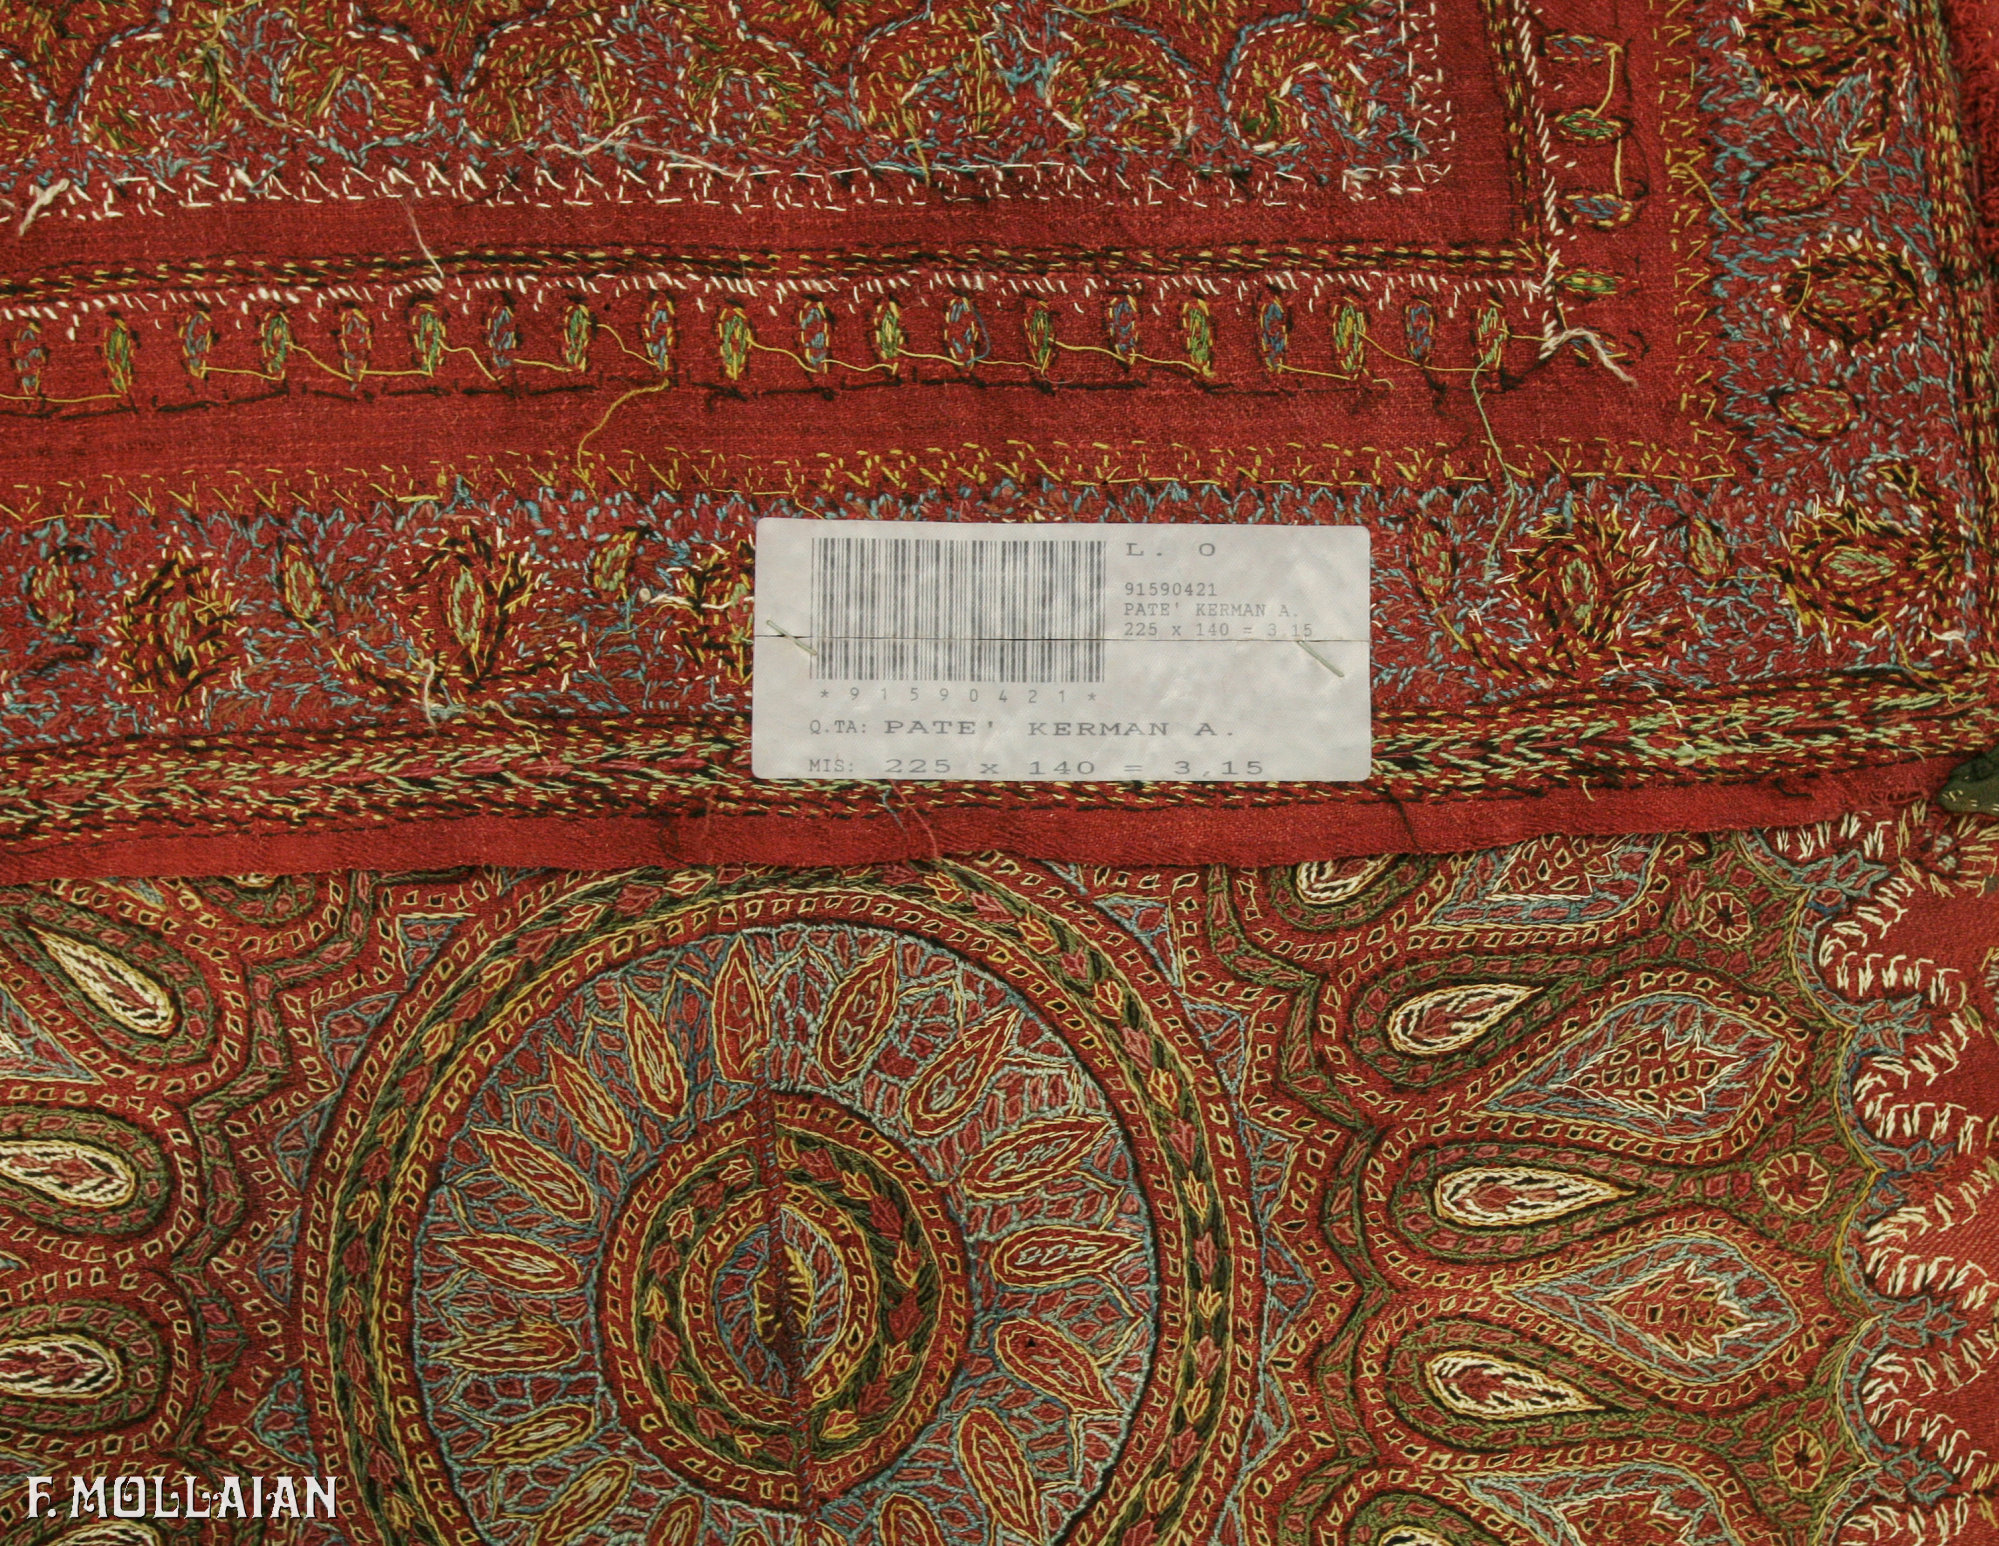 Persischer Antiker Pate‘ Kerman n°:91590421